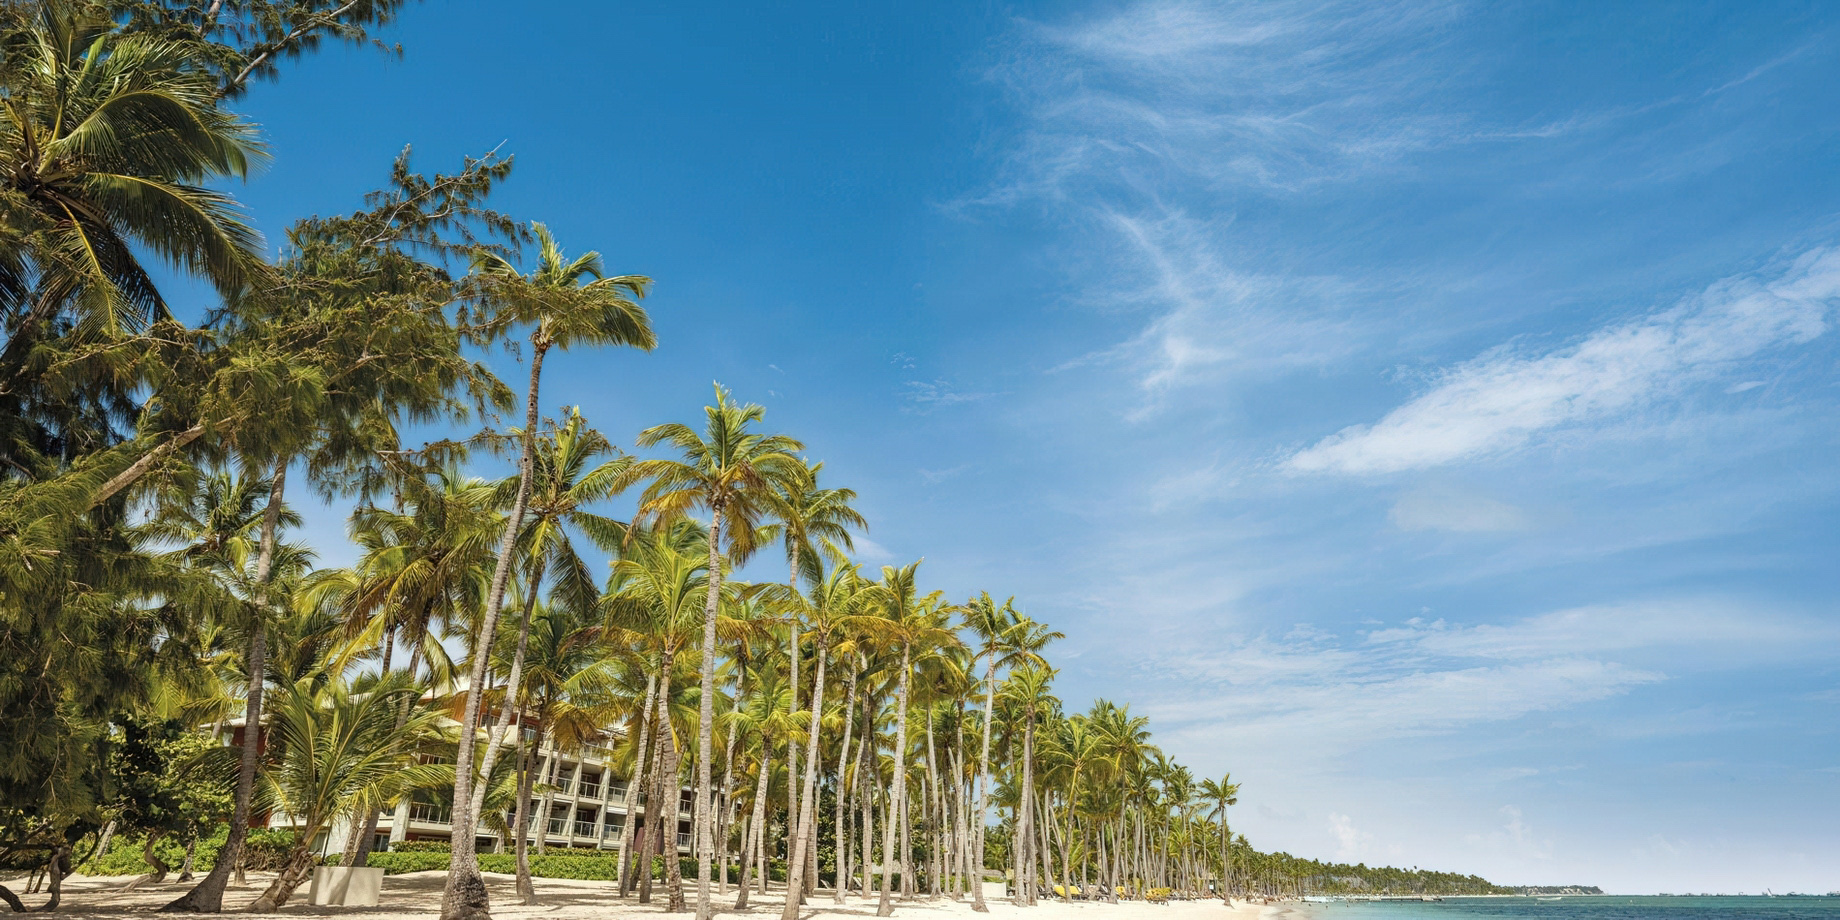 Barceló Bávaro Palace Hotel Grand Resort – Punta Cana, Dominican Republic – Beach